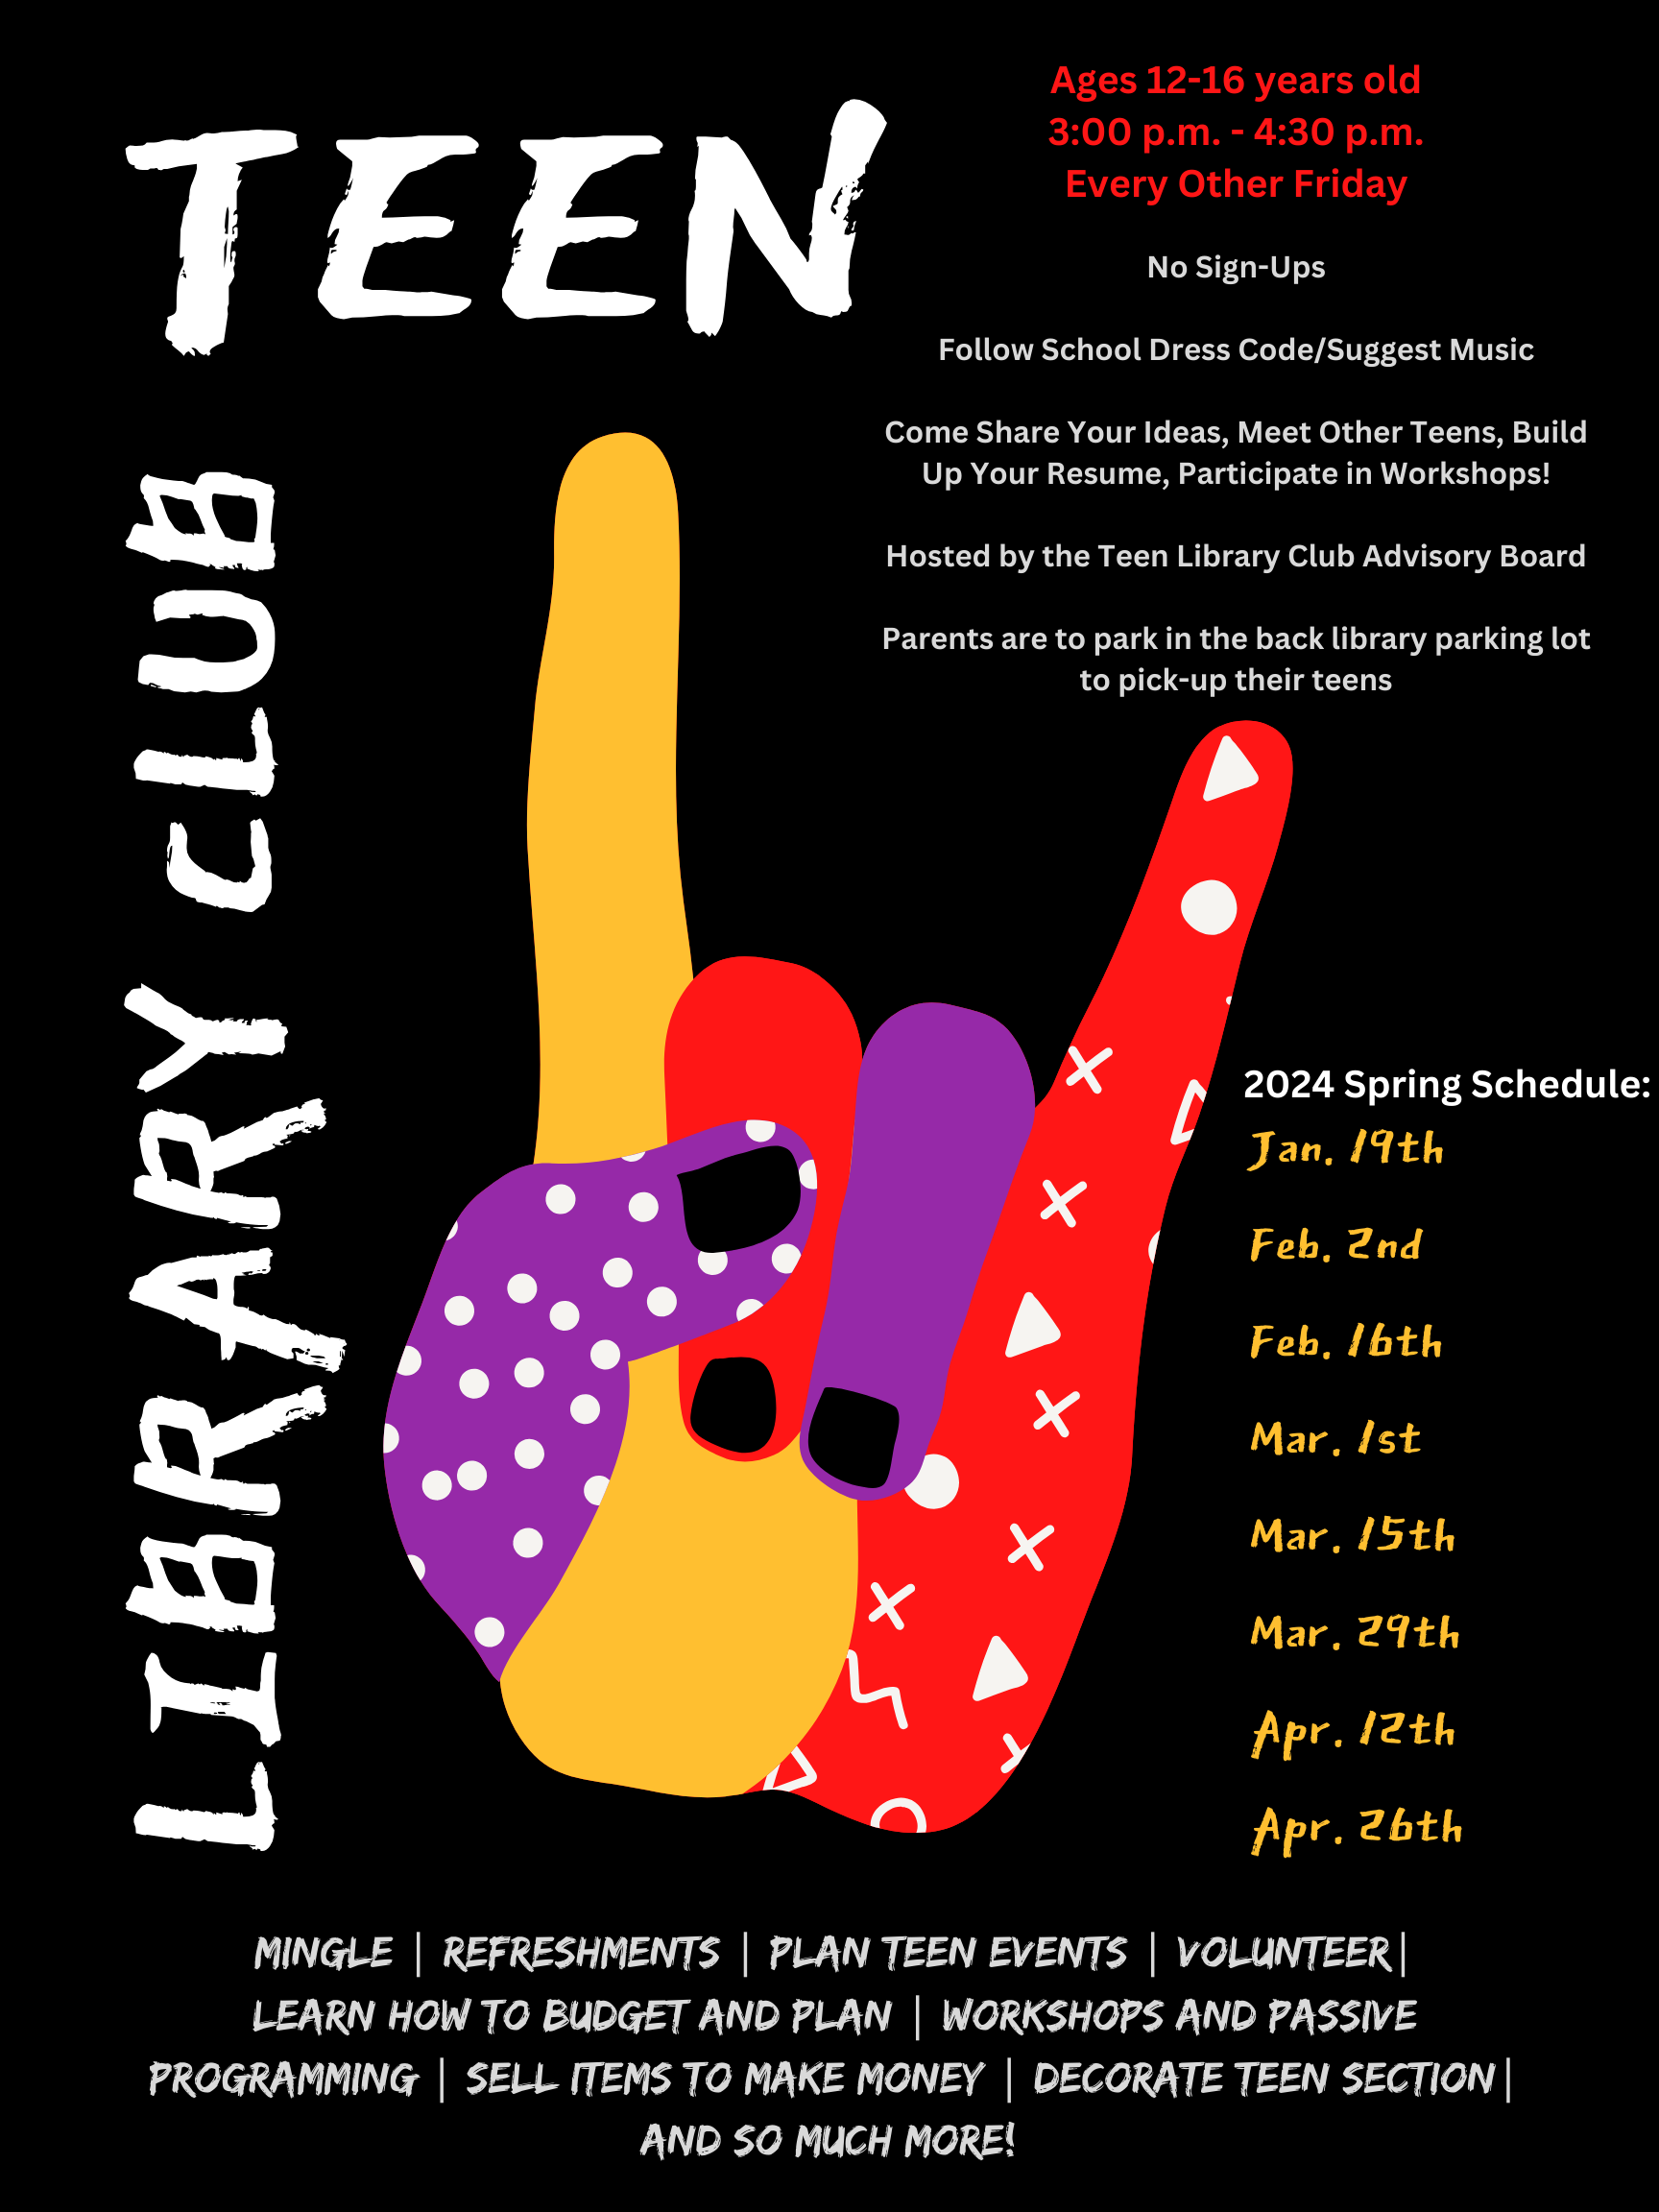 Teen Library Club